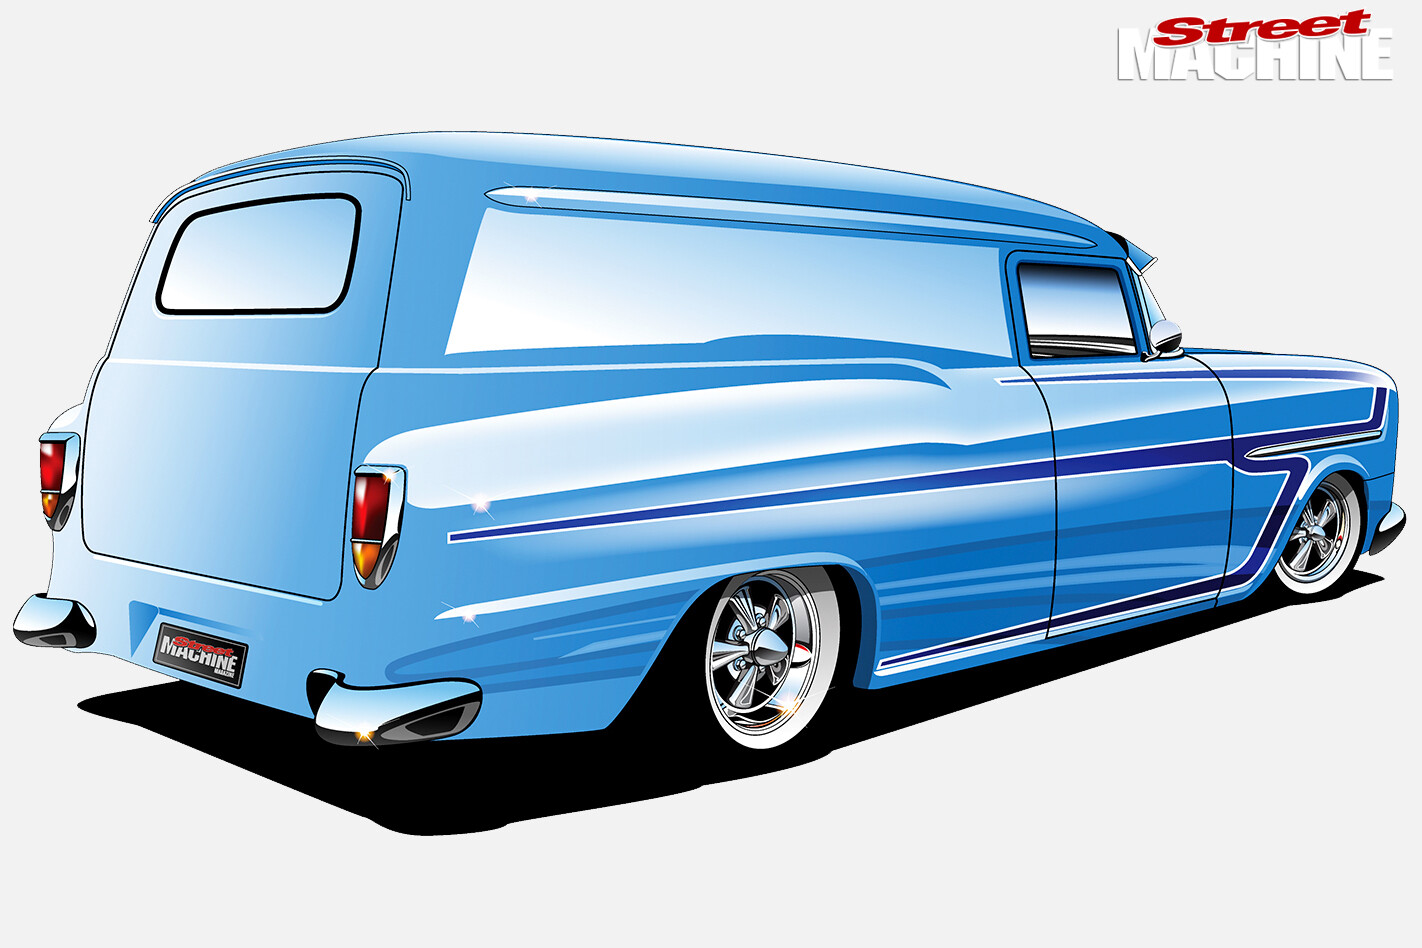 Holden -FB-van -design -rear